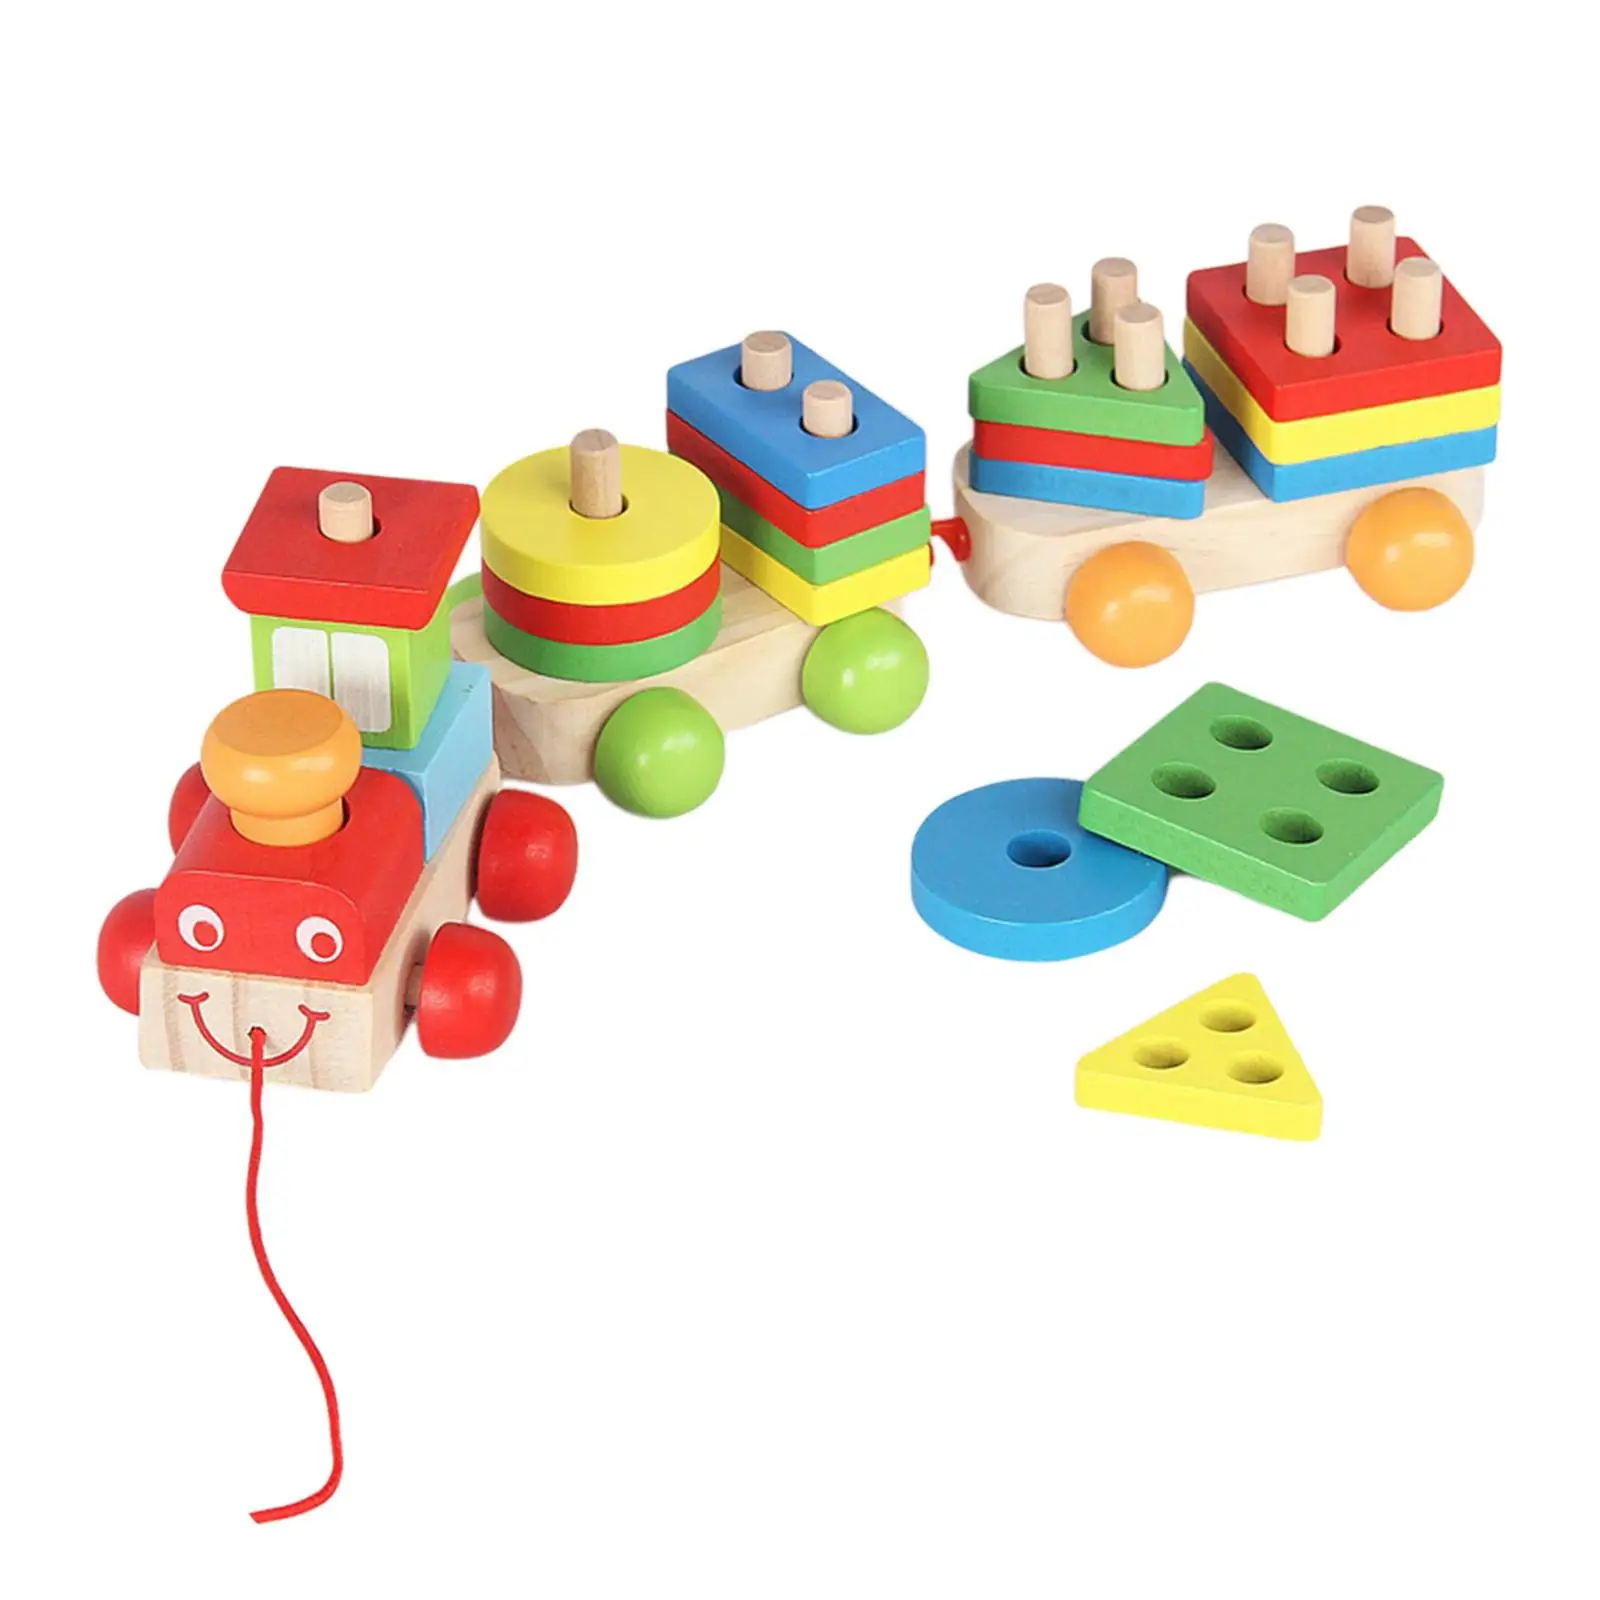 Wooden Matching Toy Developmental Toy Intelligence Toy Matching Puzzle Stacker for Preschool Kids Boy Girls Children Gift